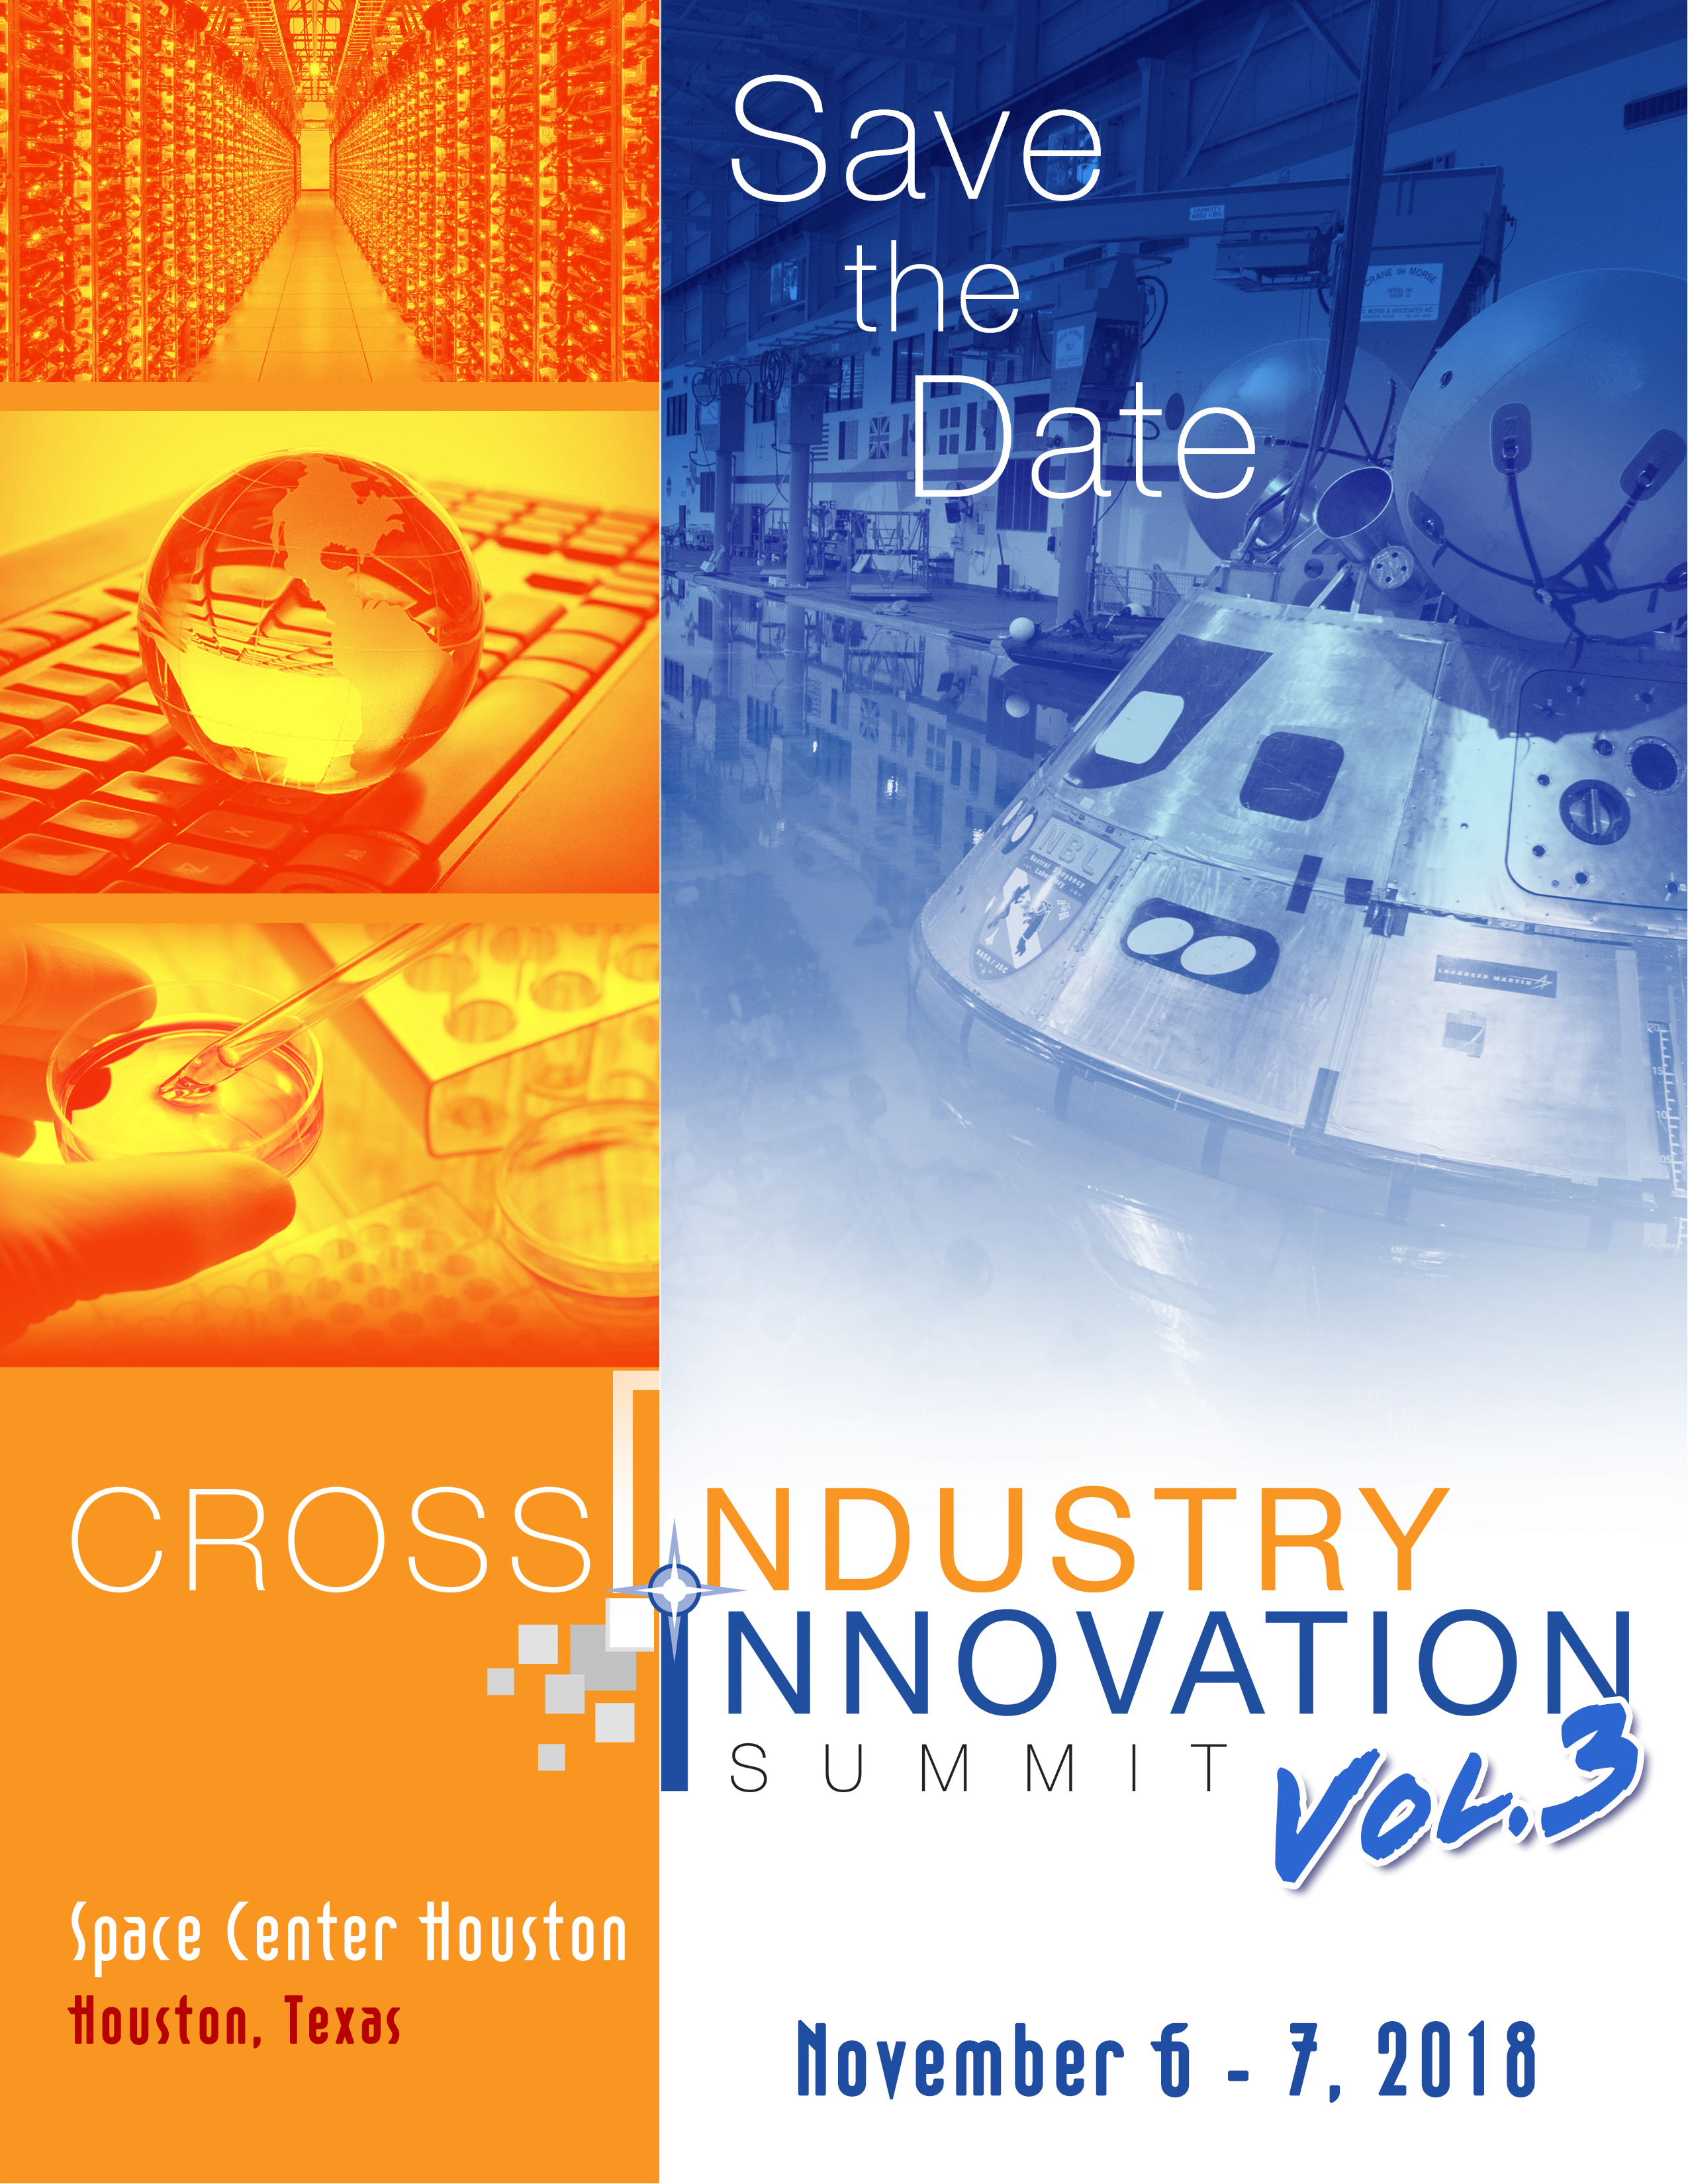 Cross Industry Innovation Summit Volume Three. Space Center Houston, Houston, TX.  November 6-7, 2017.